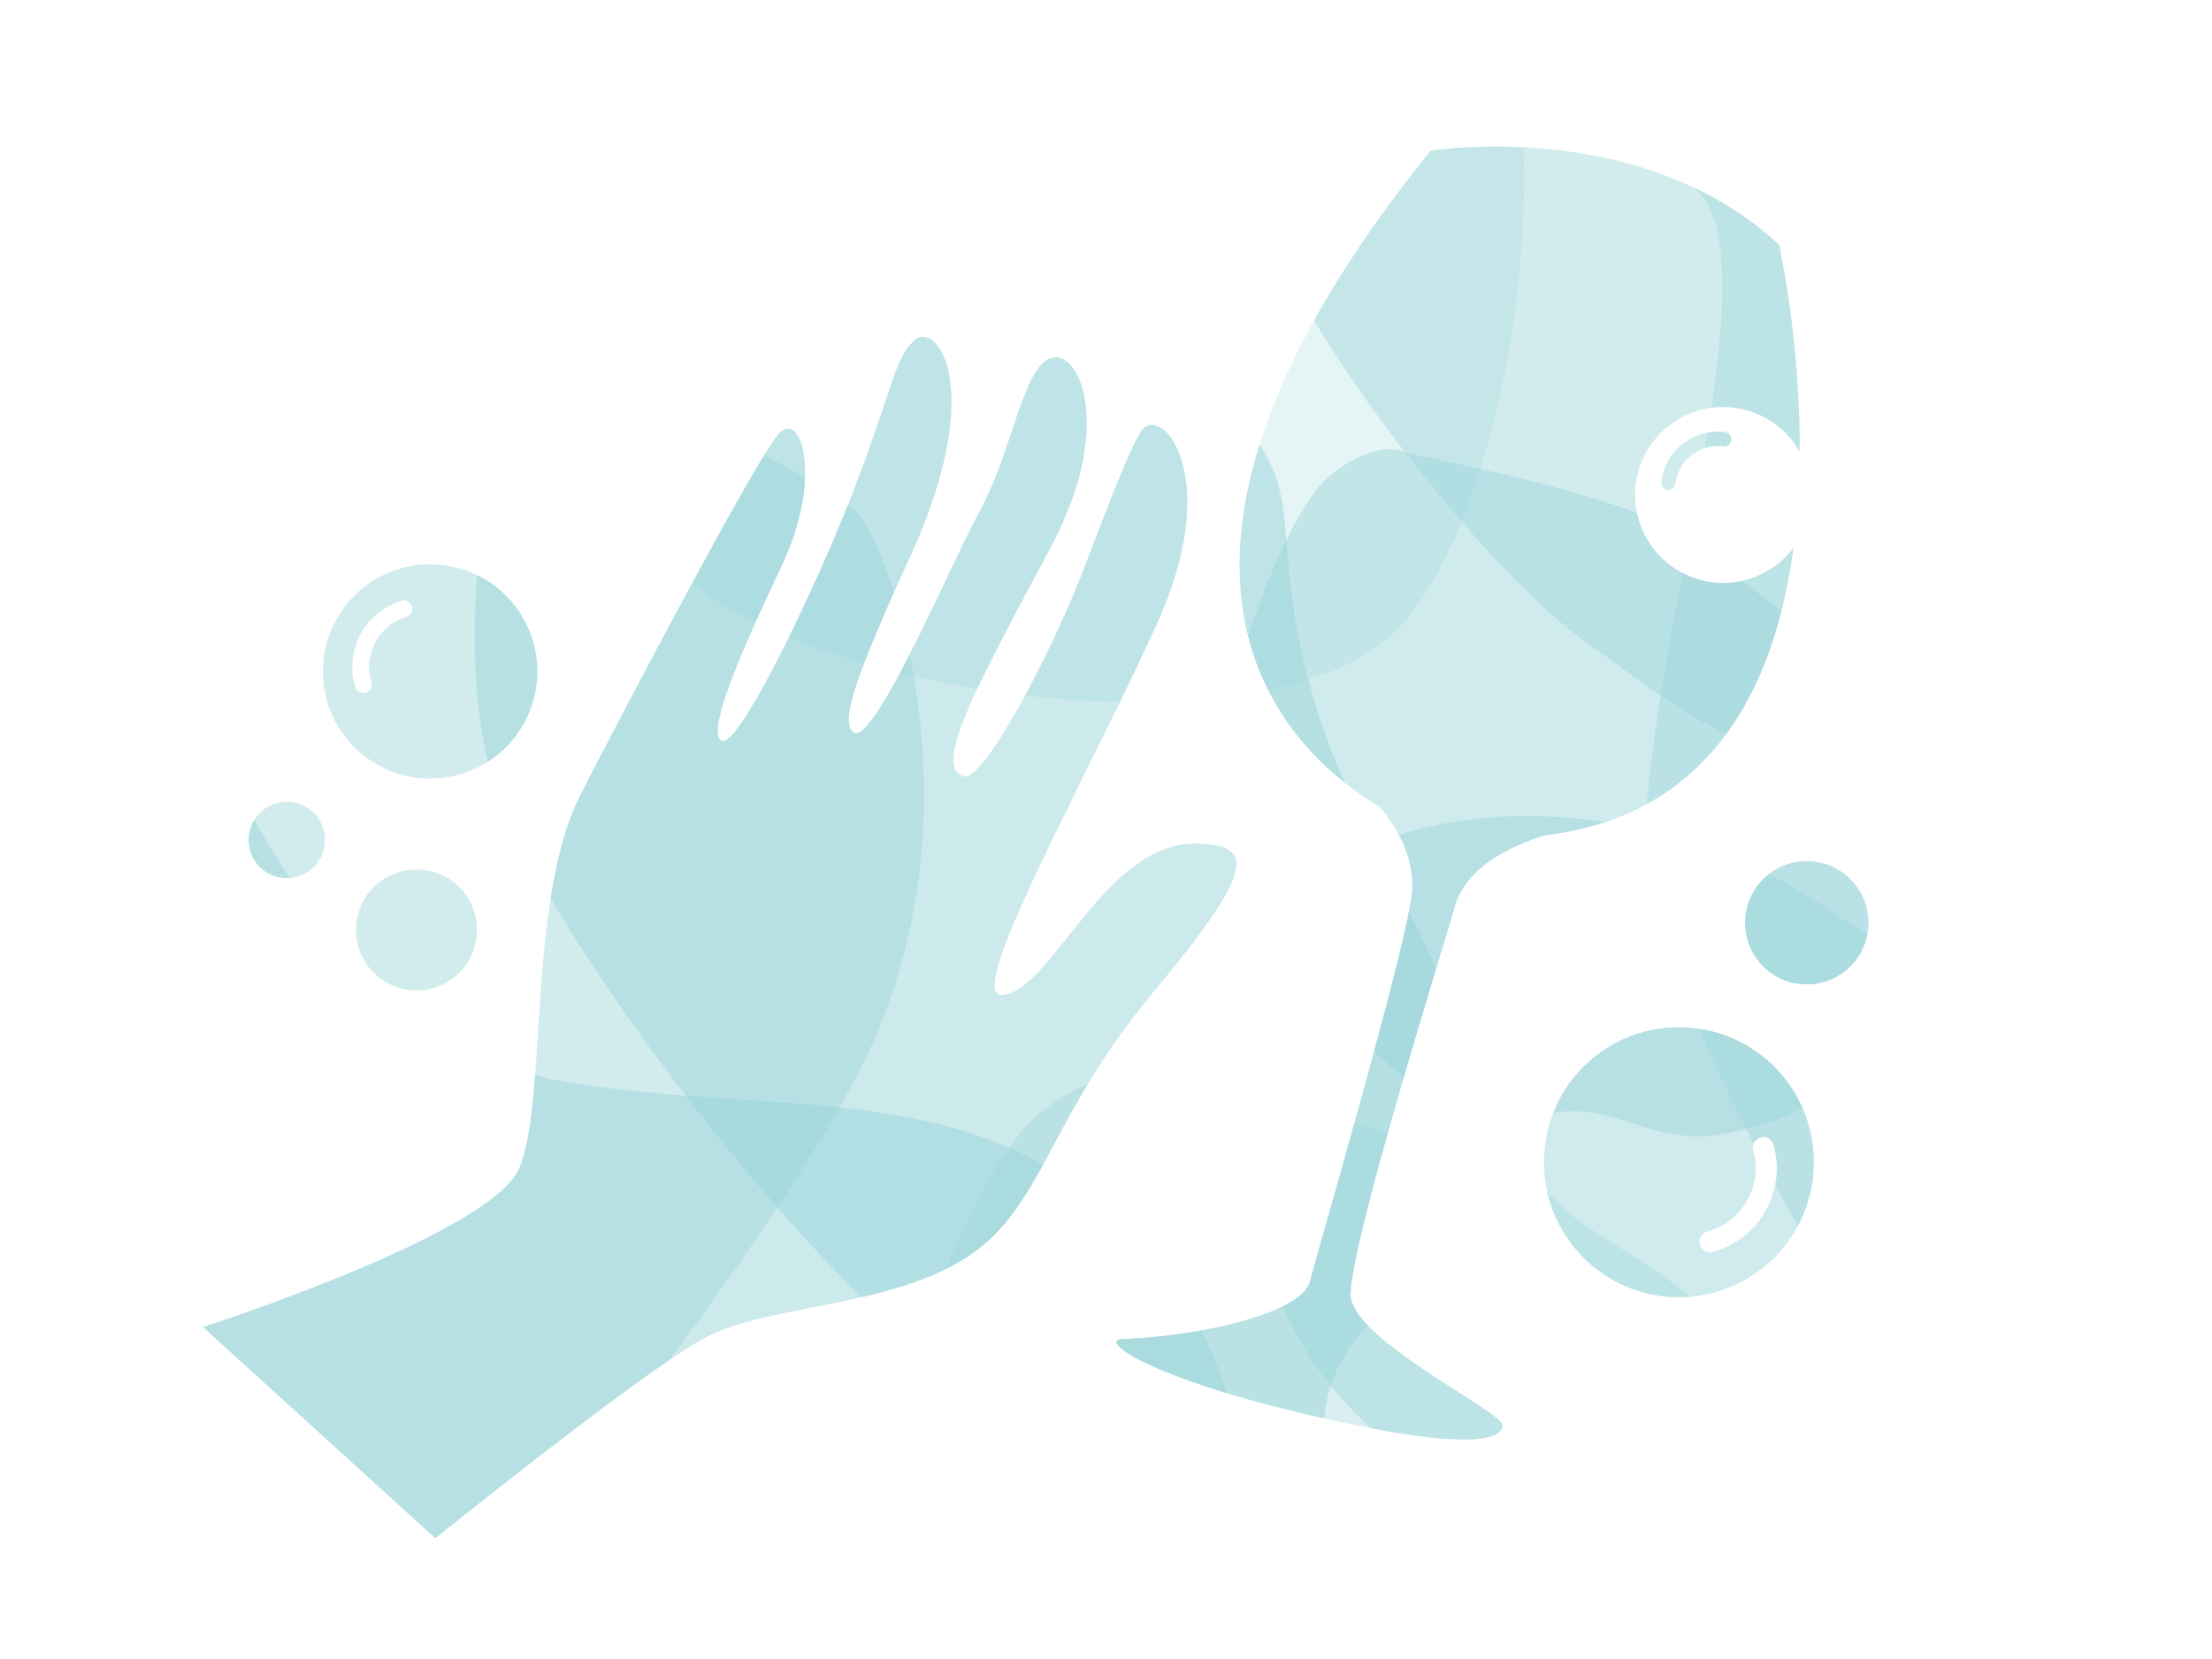 Handwashing a glass illustration